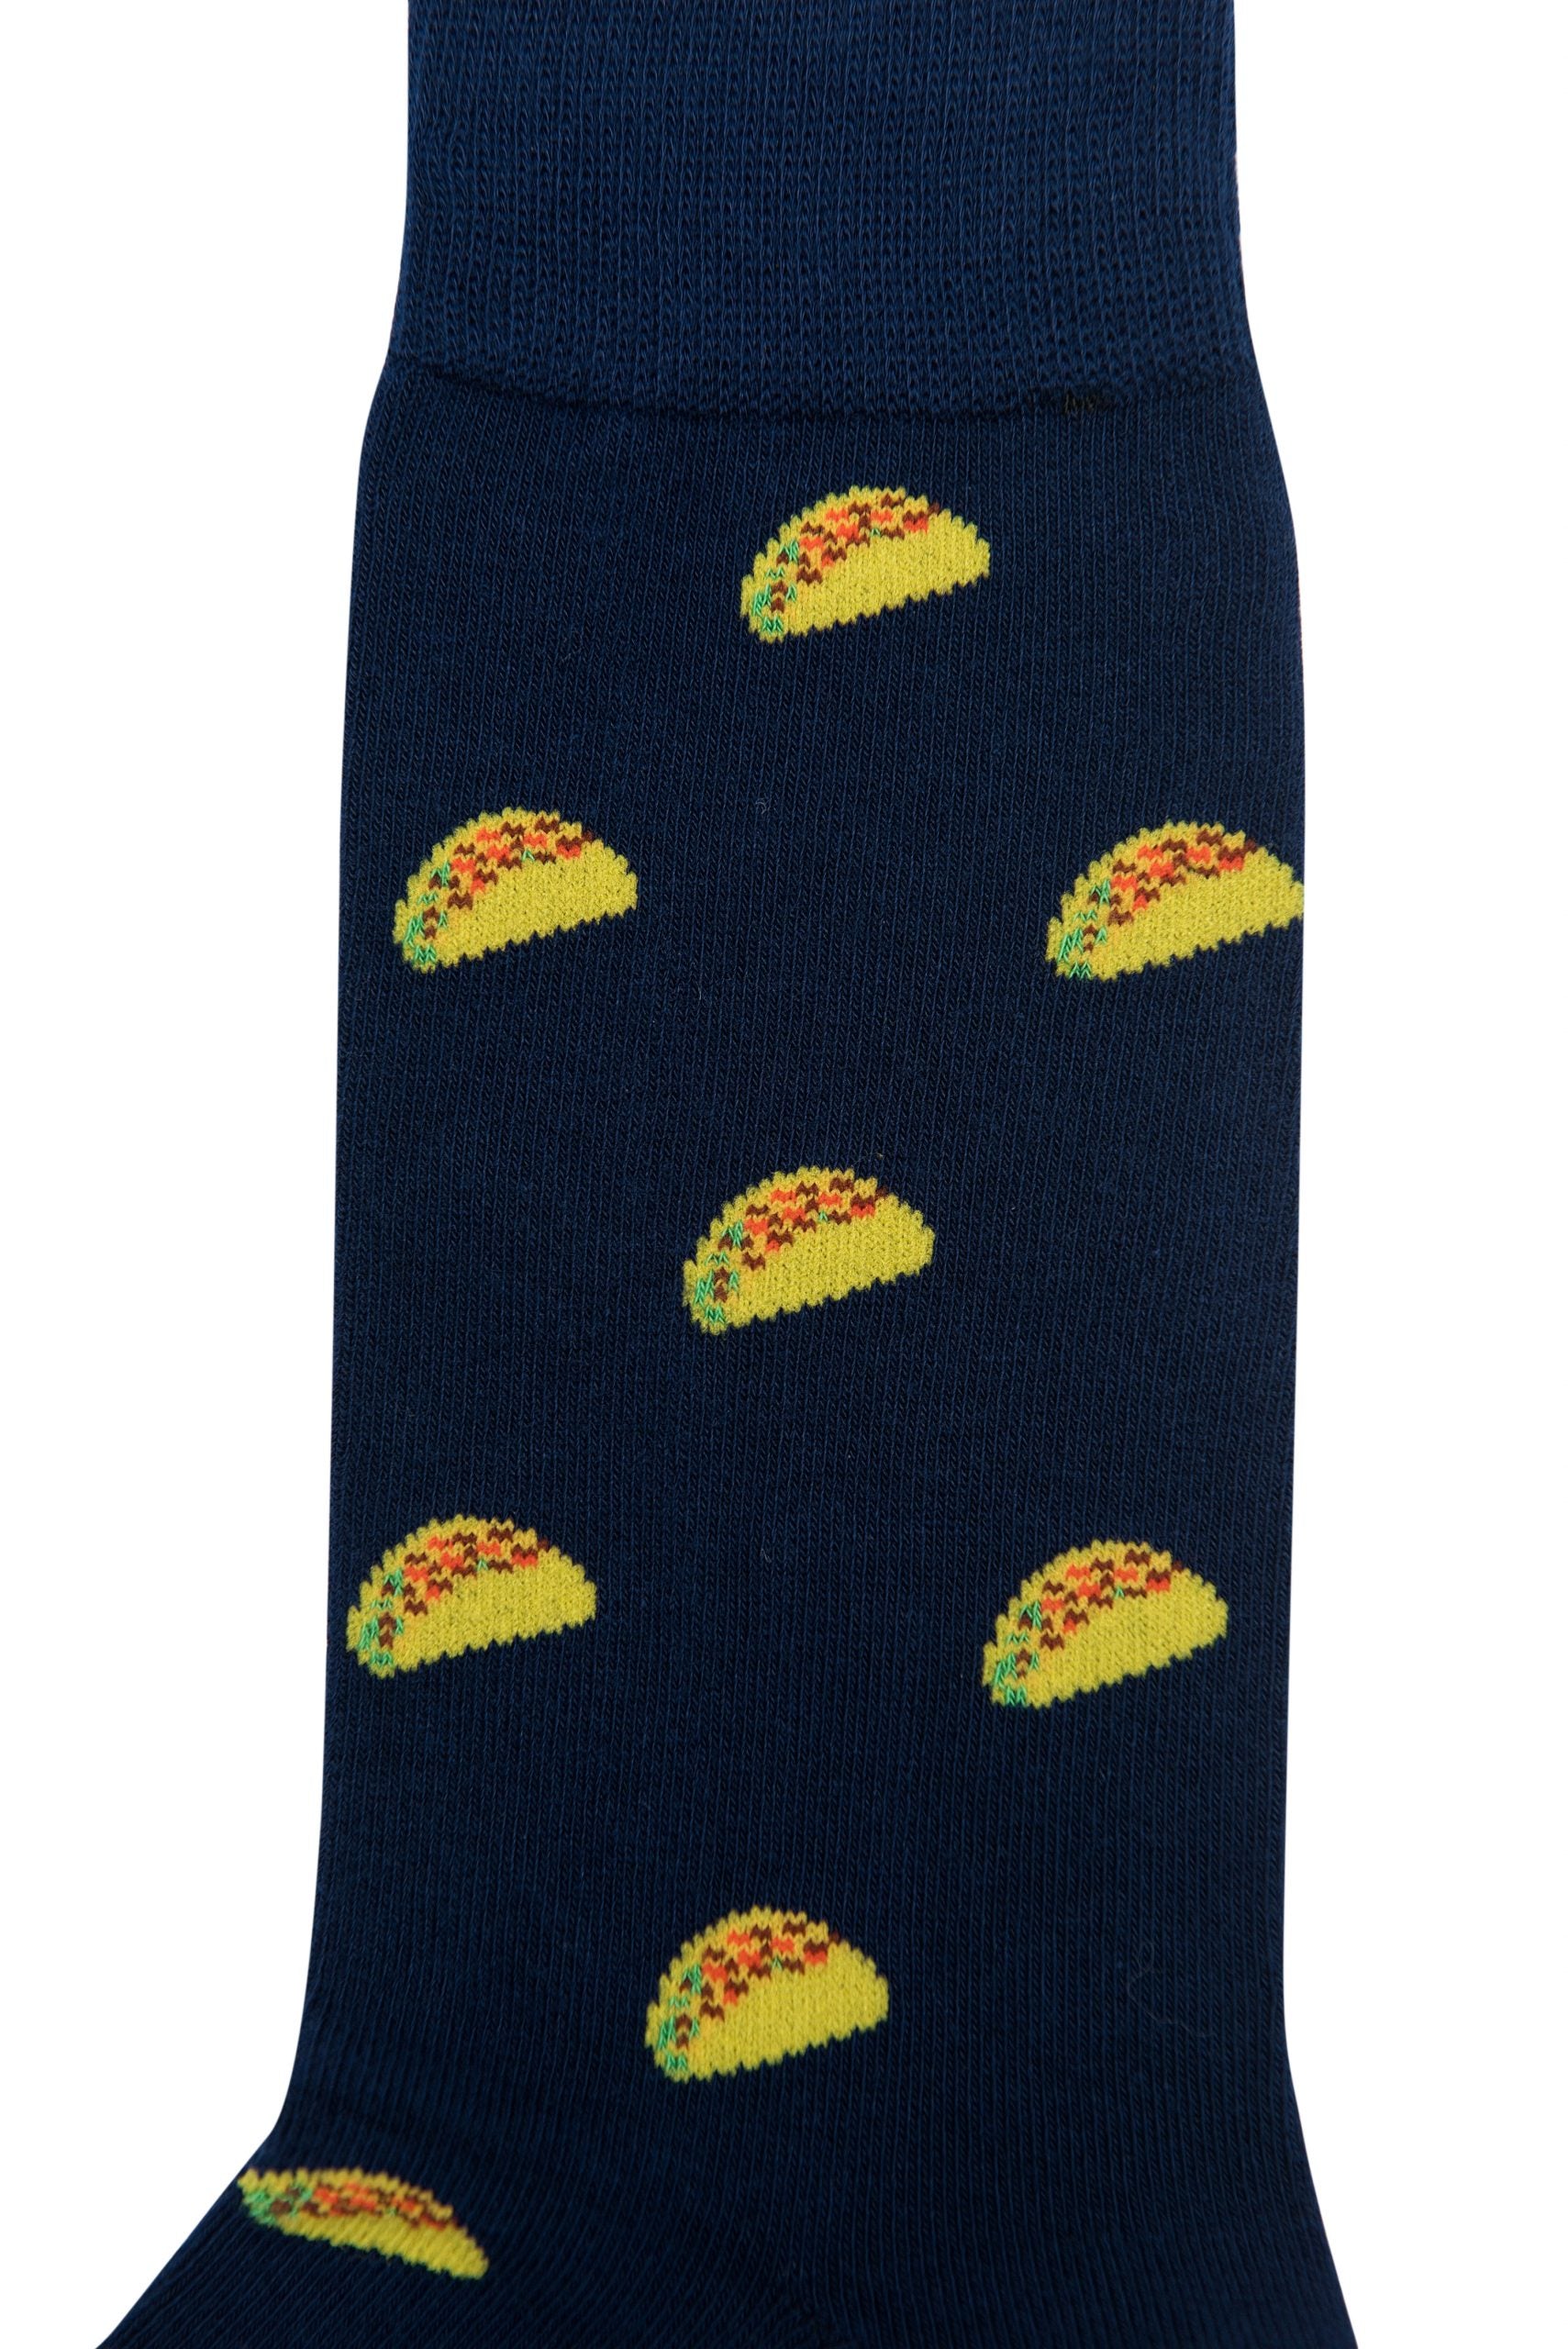 Navy blue Taco Socks showcasing playfulness.